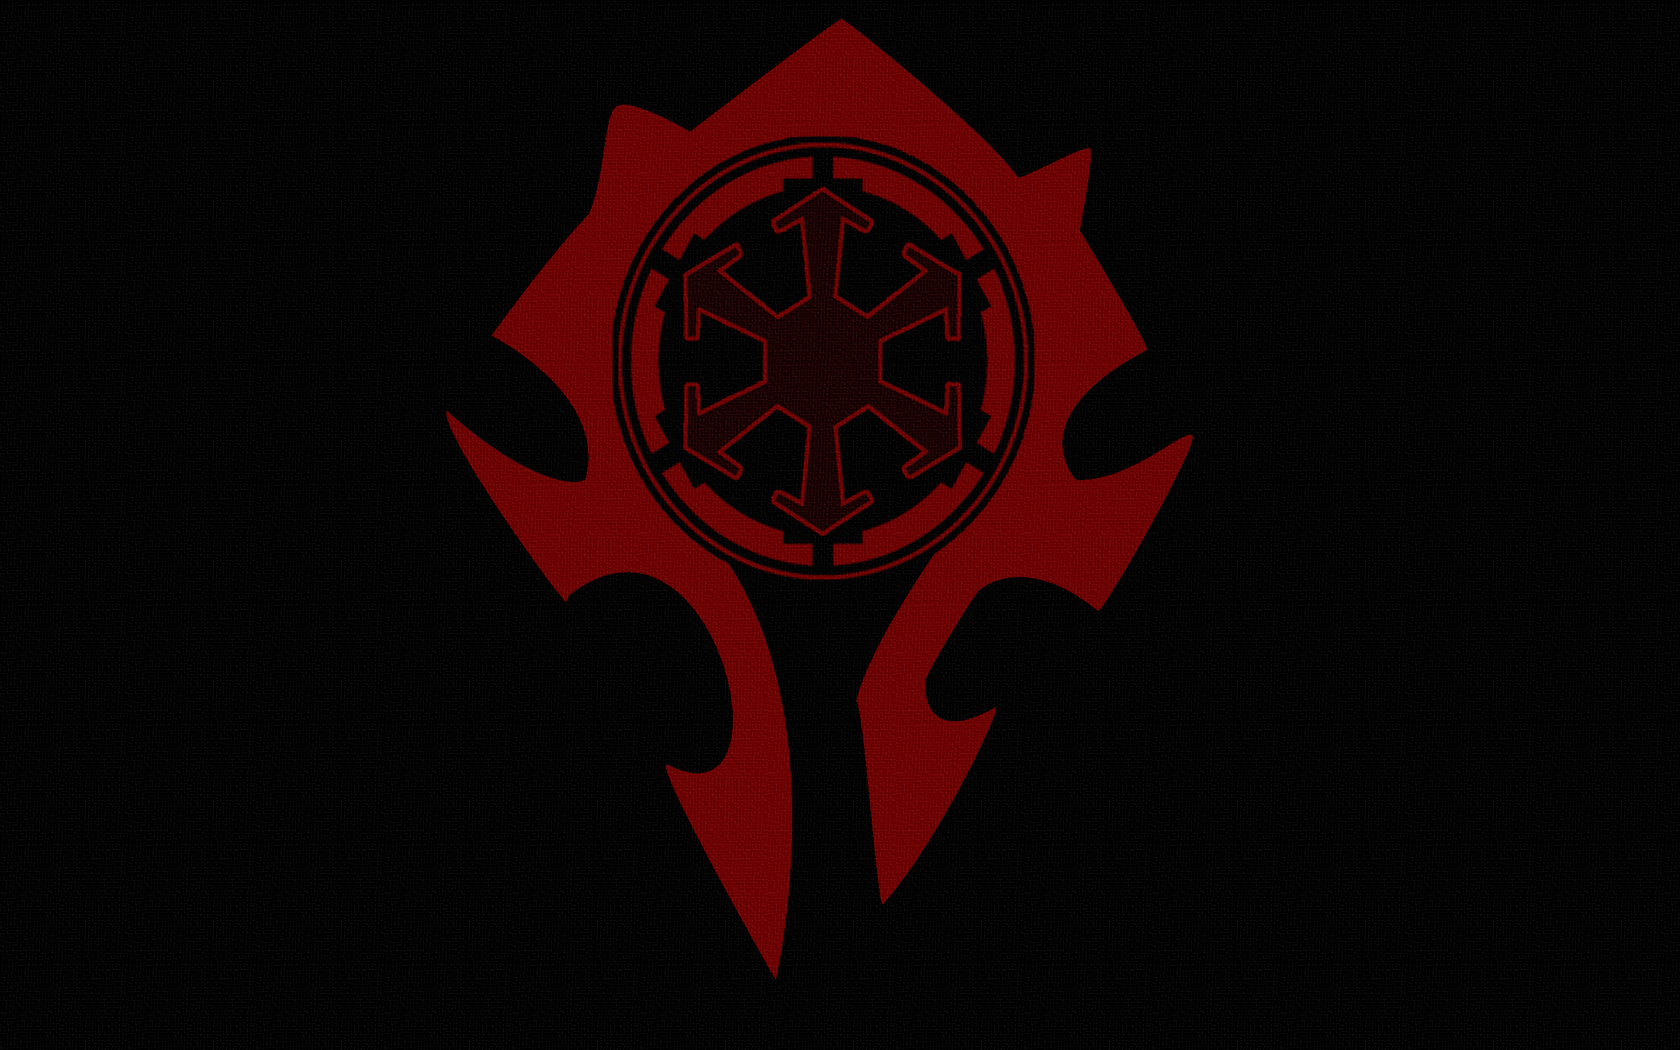 Sith Horde 1 Star Wars World Of WarCraft Wallp by JaxxTraxx on